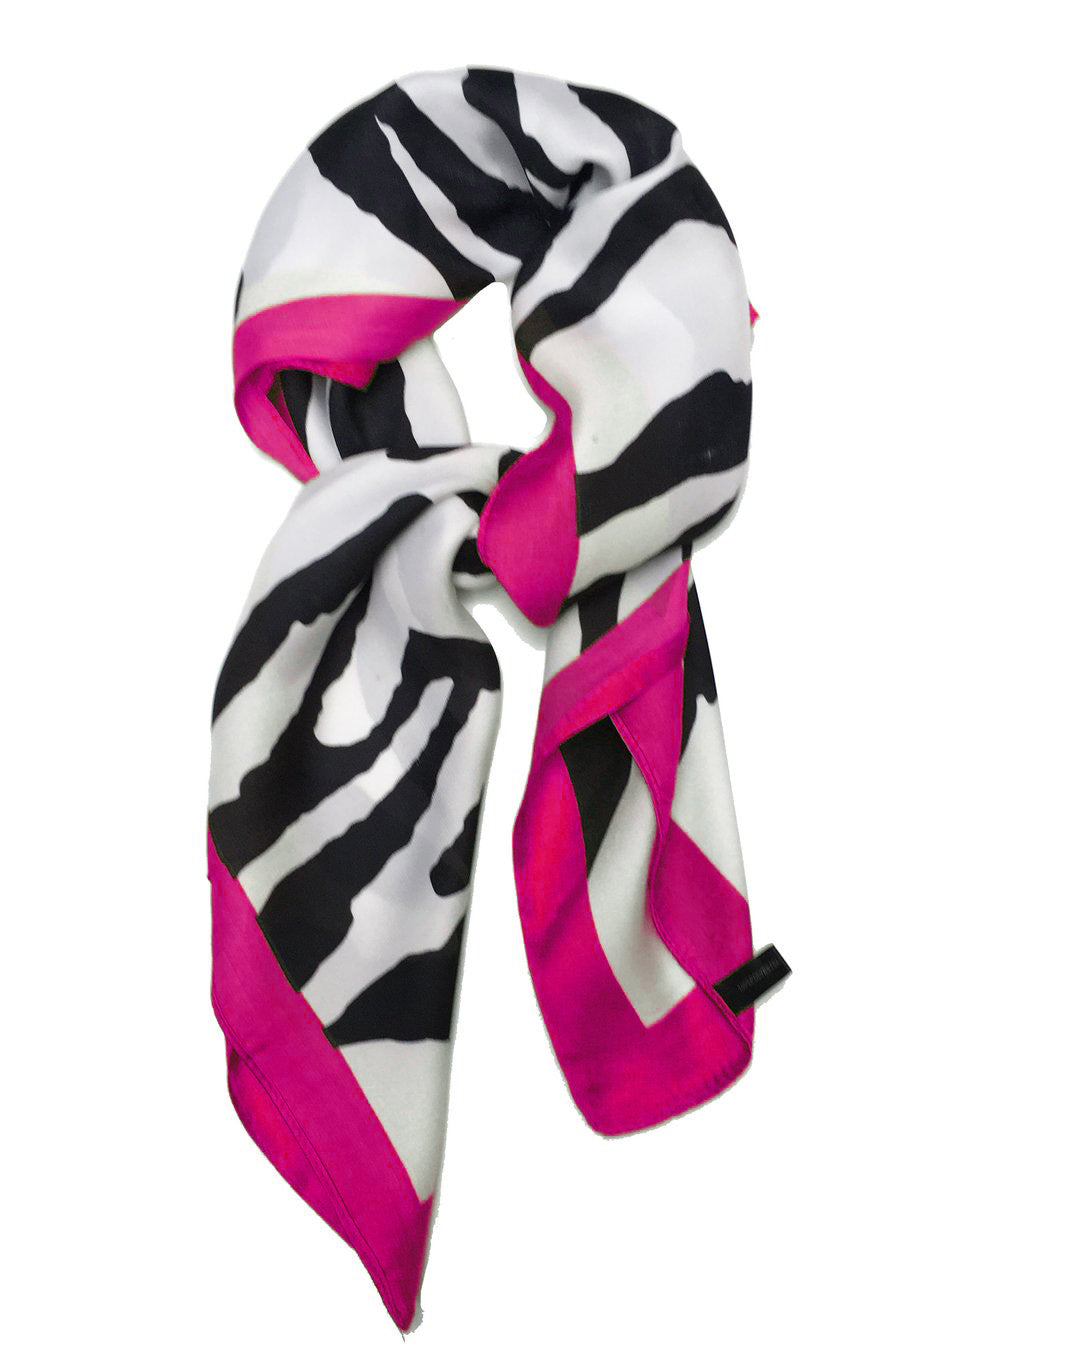 70cm x 70cm Square Scarf Fuchsia Hot Pink Zebra Animal Print Pattern Scarf Thin Silk Womens Summer Spring